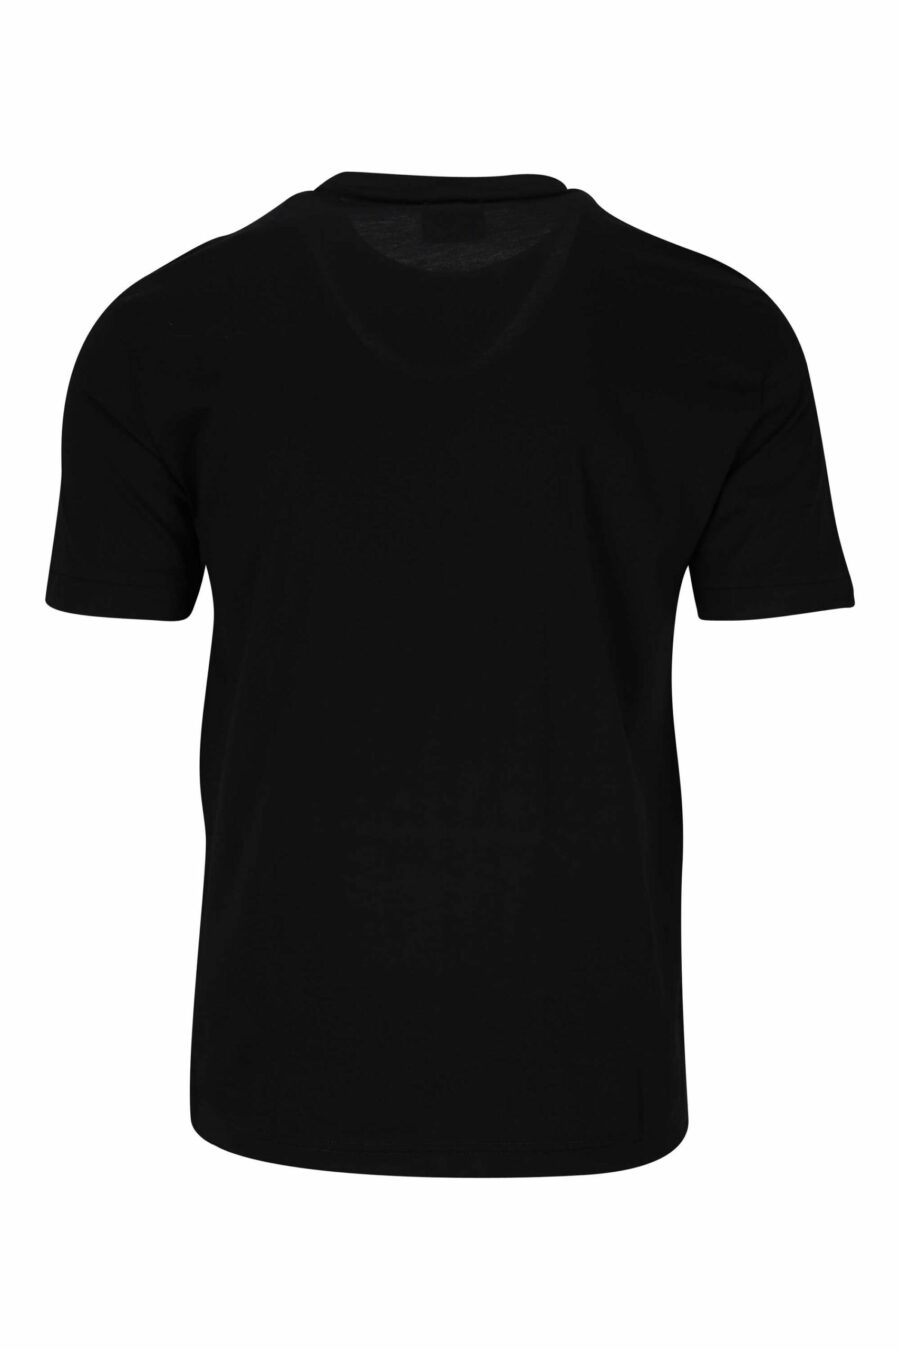 Camiseta negro con minilogo en cinta "lux identity" negro - 8058947490189 1 scaled